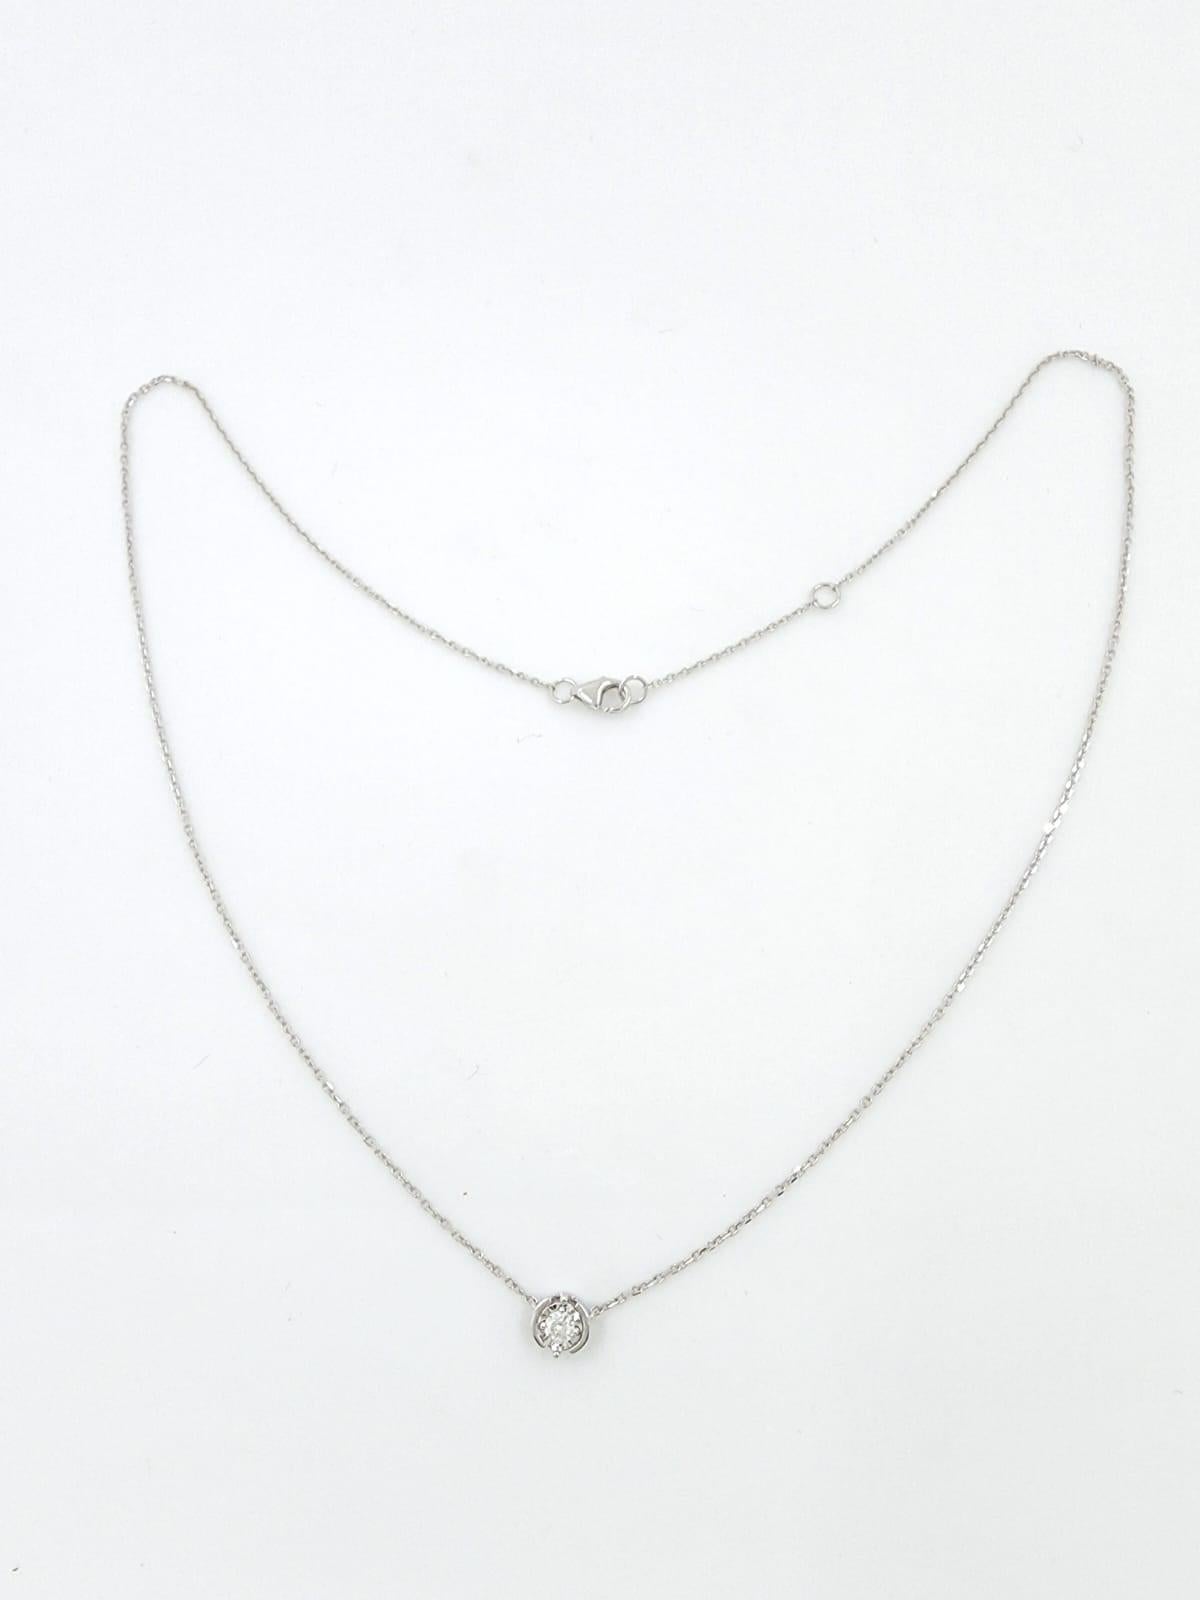 Round Cut 0.10 Carat Diamond Necklace in 14 Karat White Gold For Sale